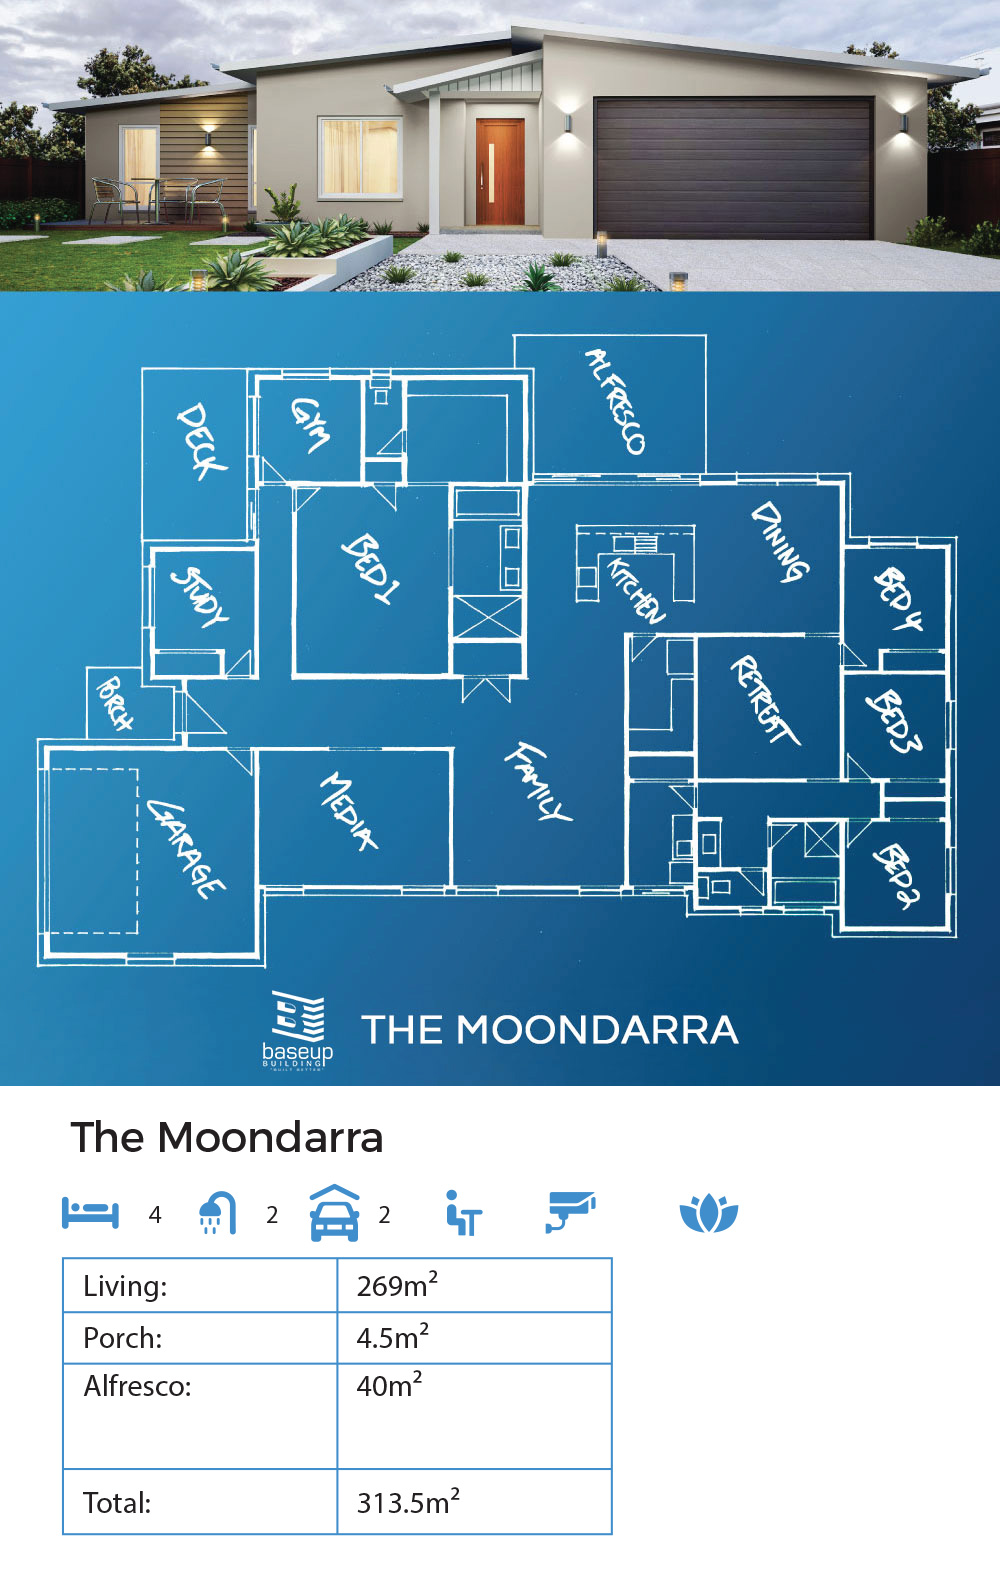 The Moondara